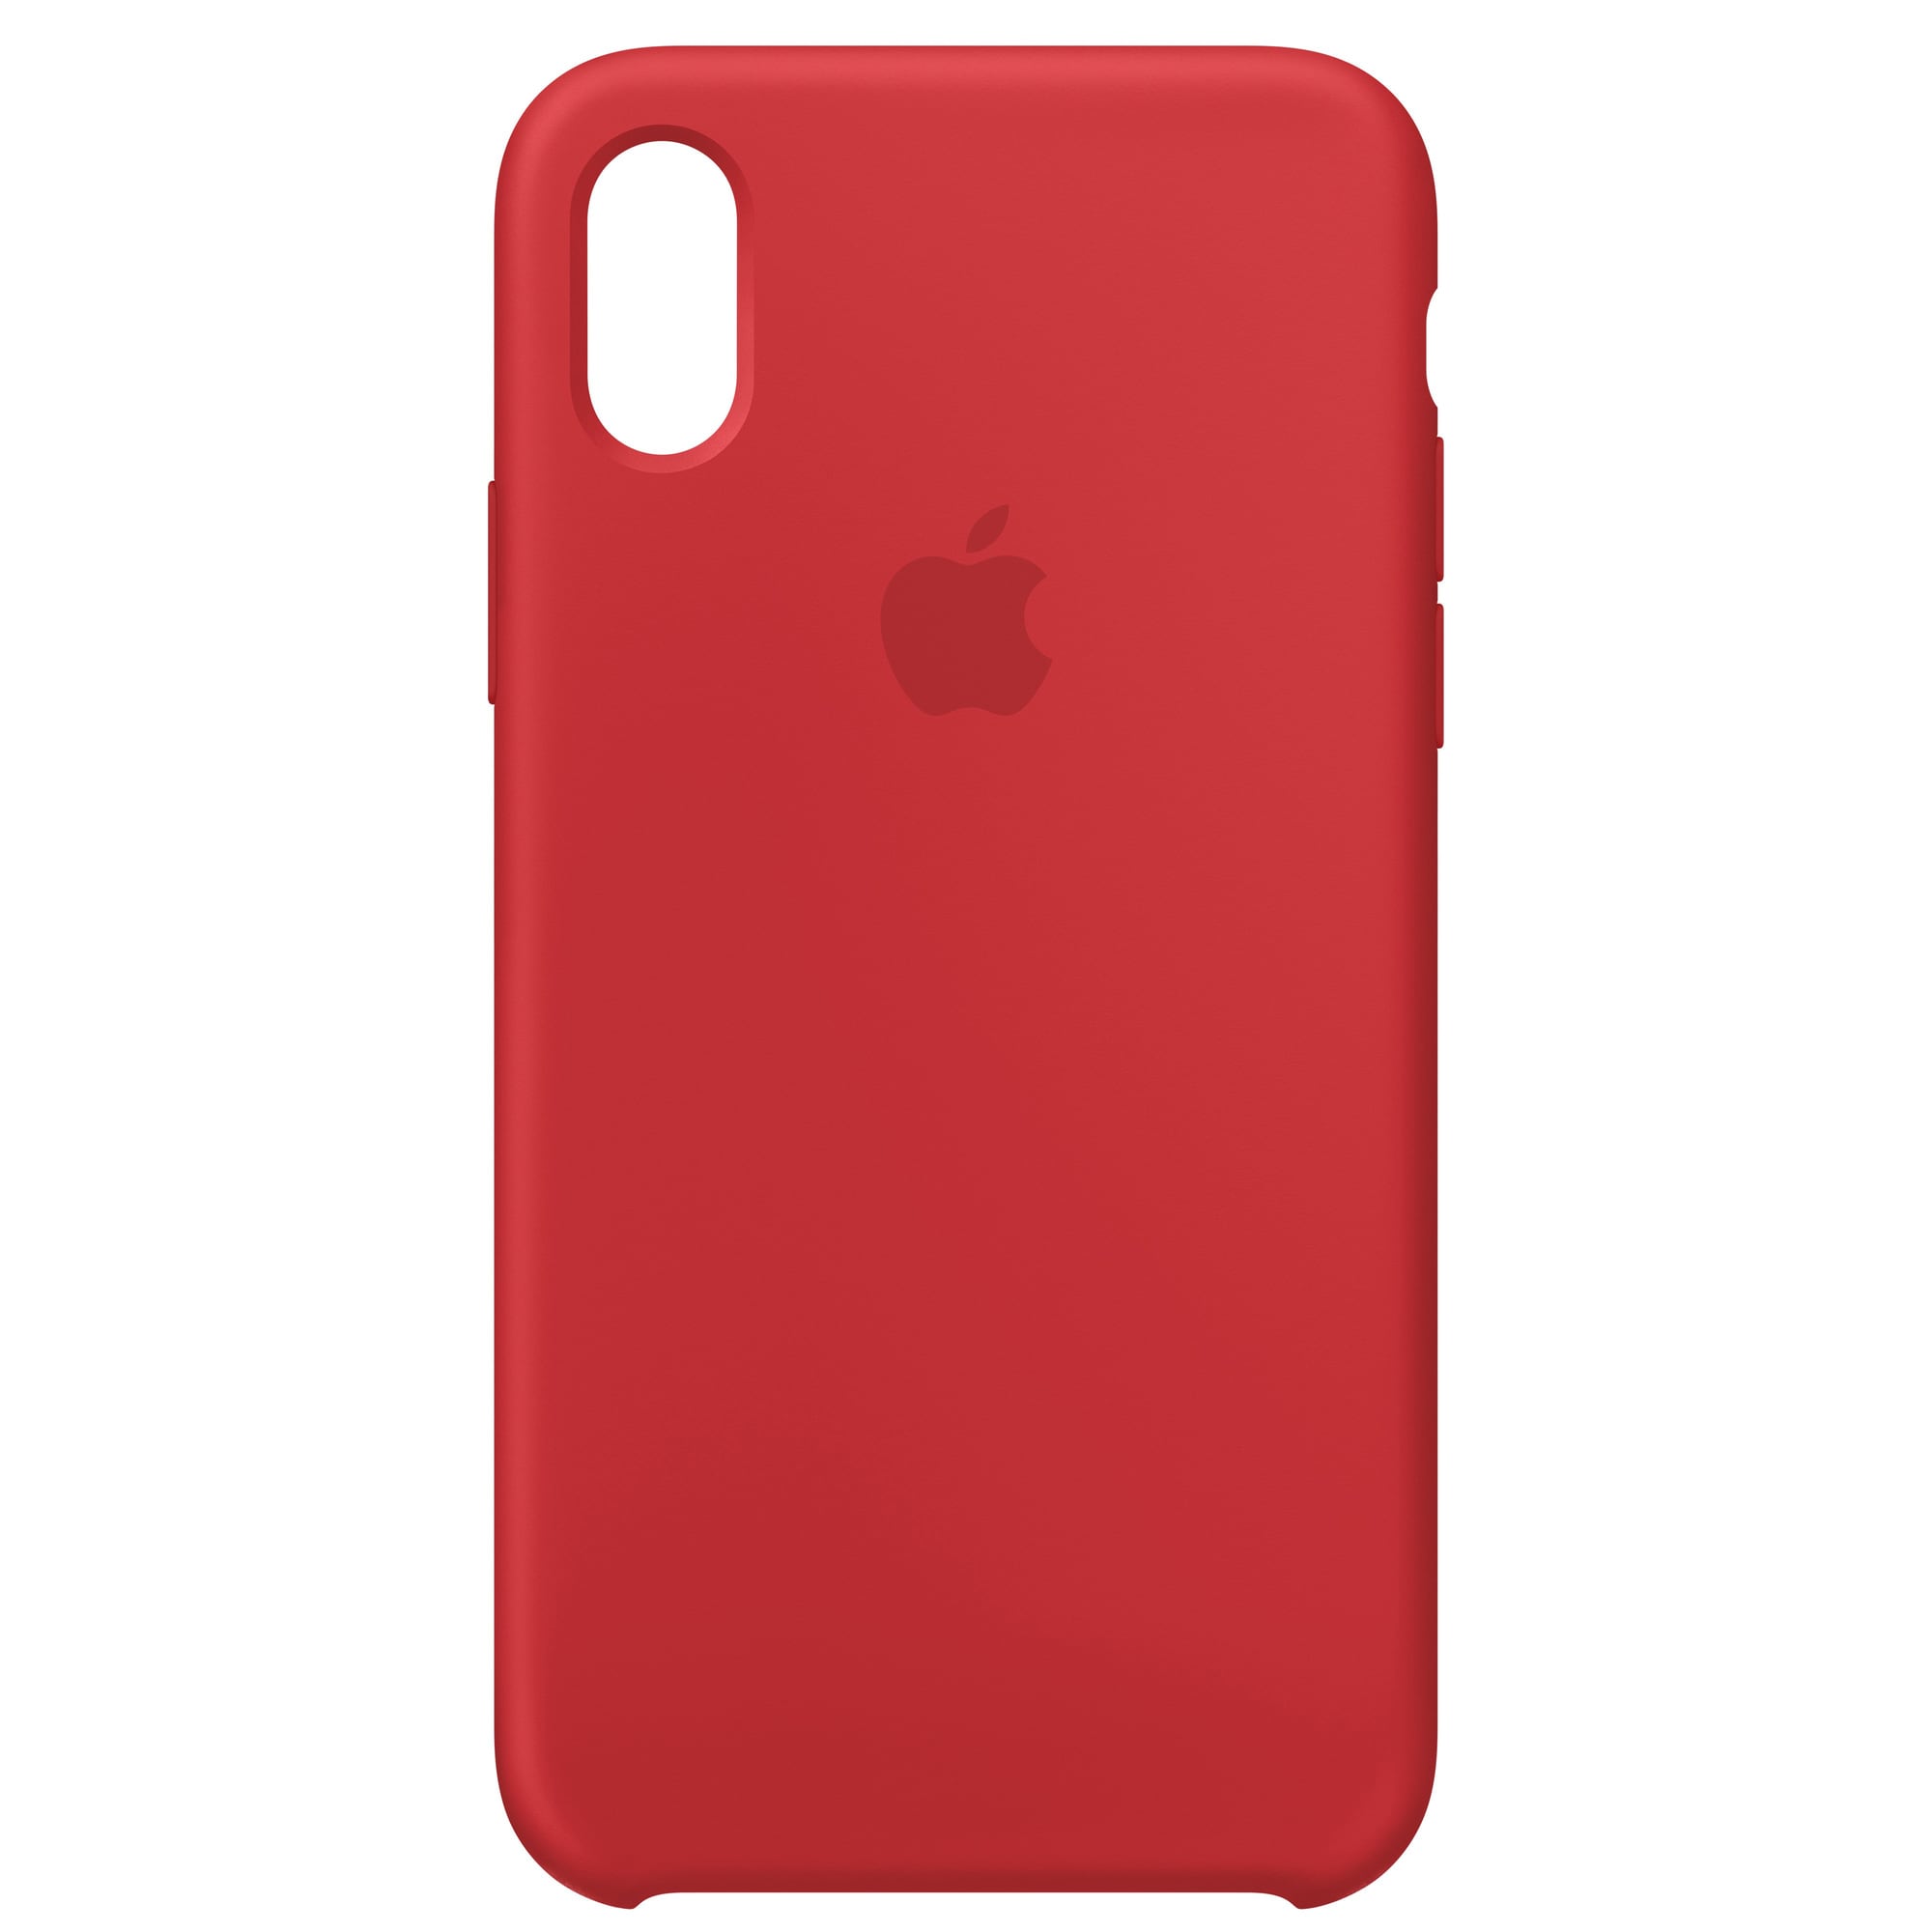 iPhone X silikondeksel (rød) - Elkjøp